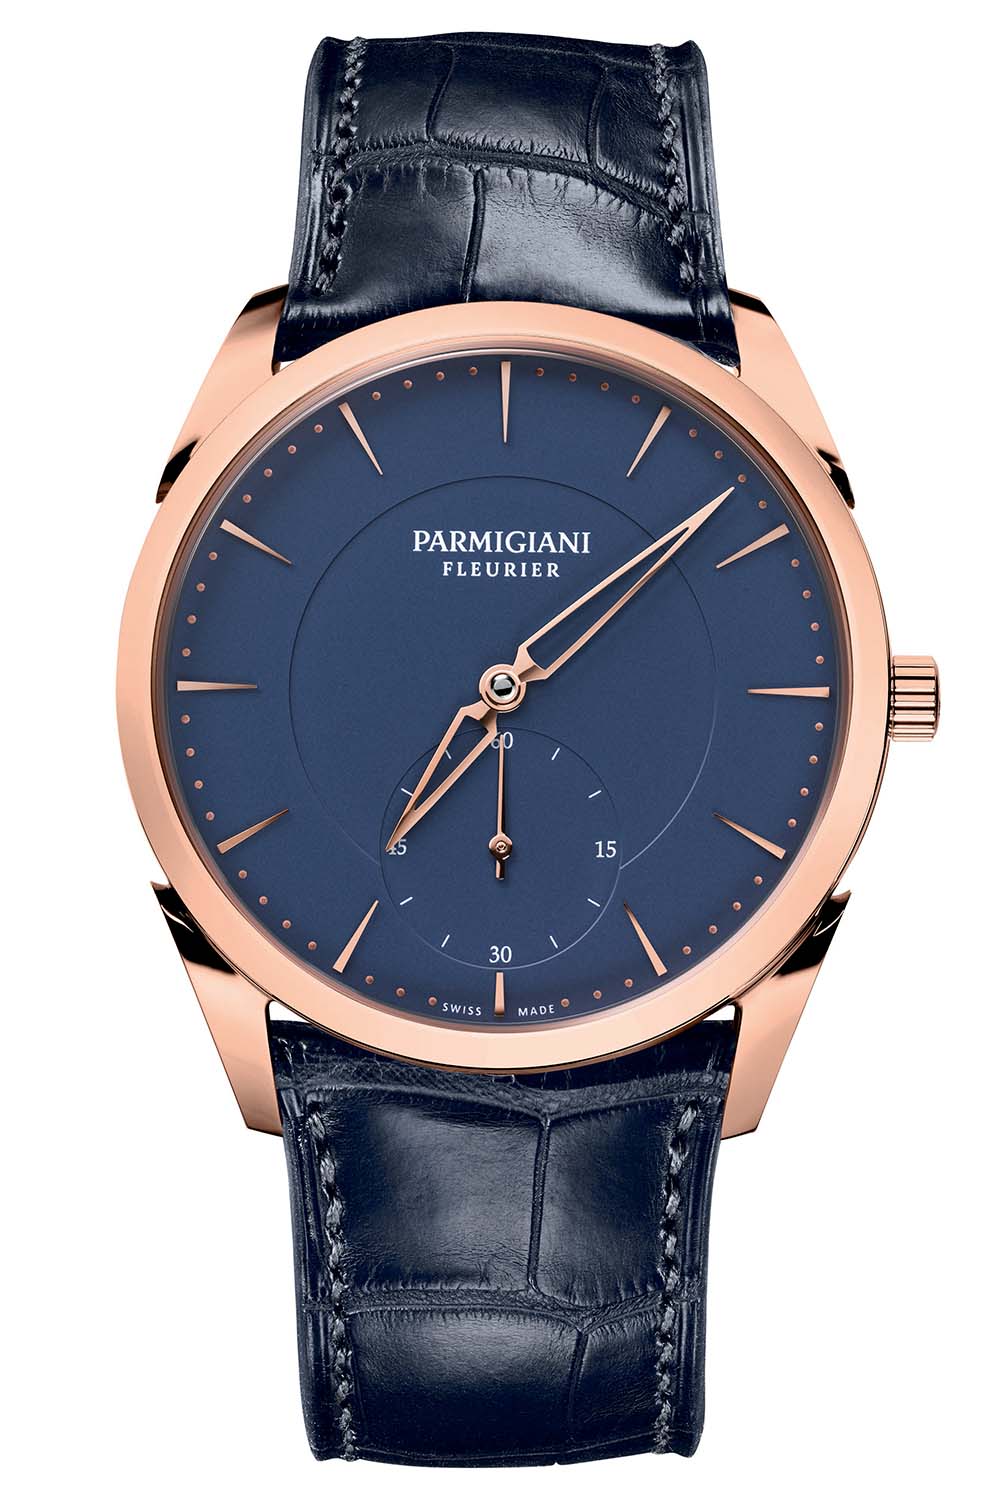 2019 Redesigned Parmigiani Fleurier Tonda 1950 Ultra-Thin Dress Watch